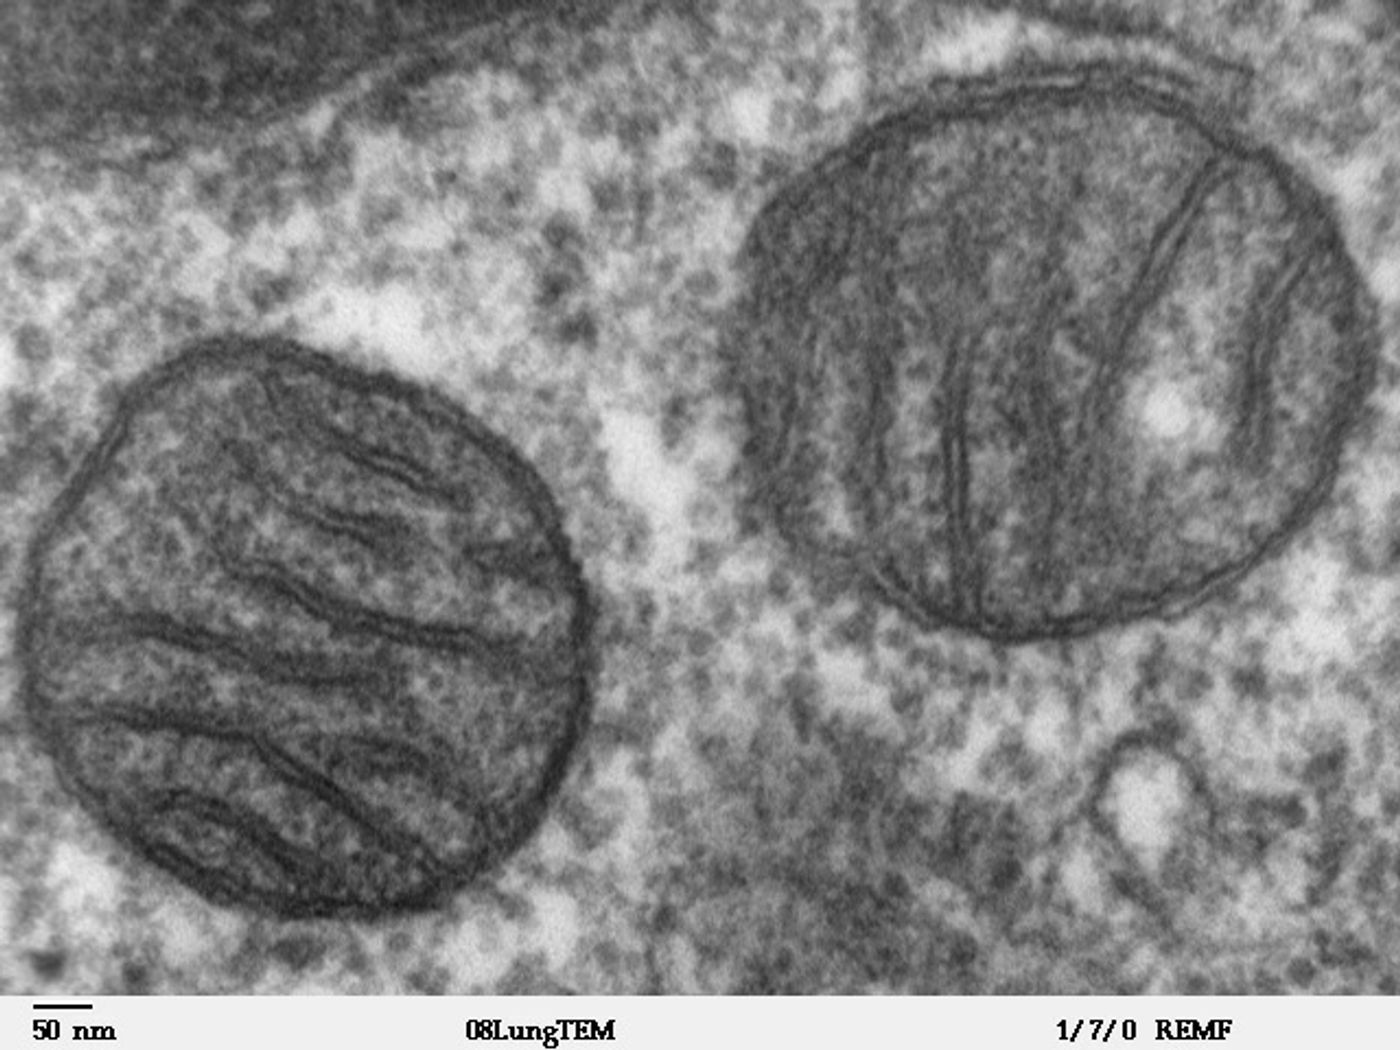 Transmission electron microscope image of mitochondria. Credit: Louisa Howard